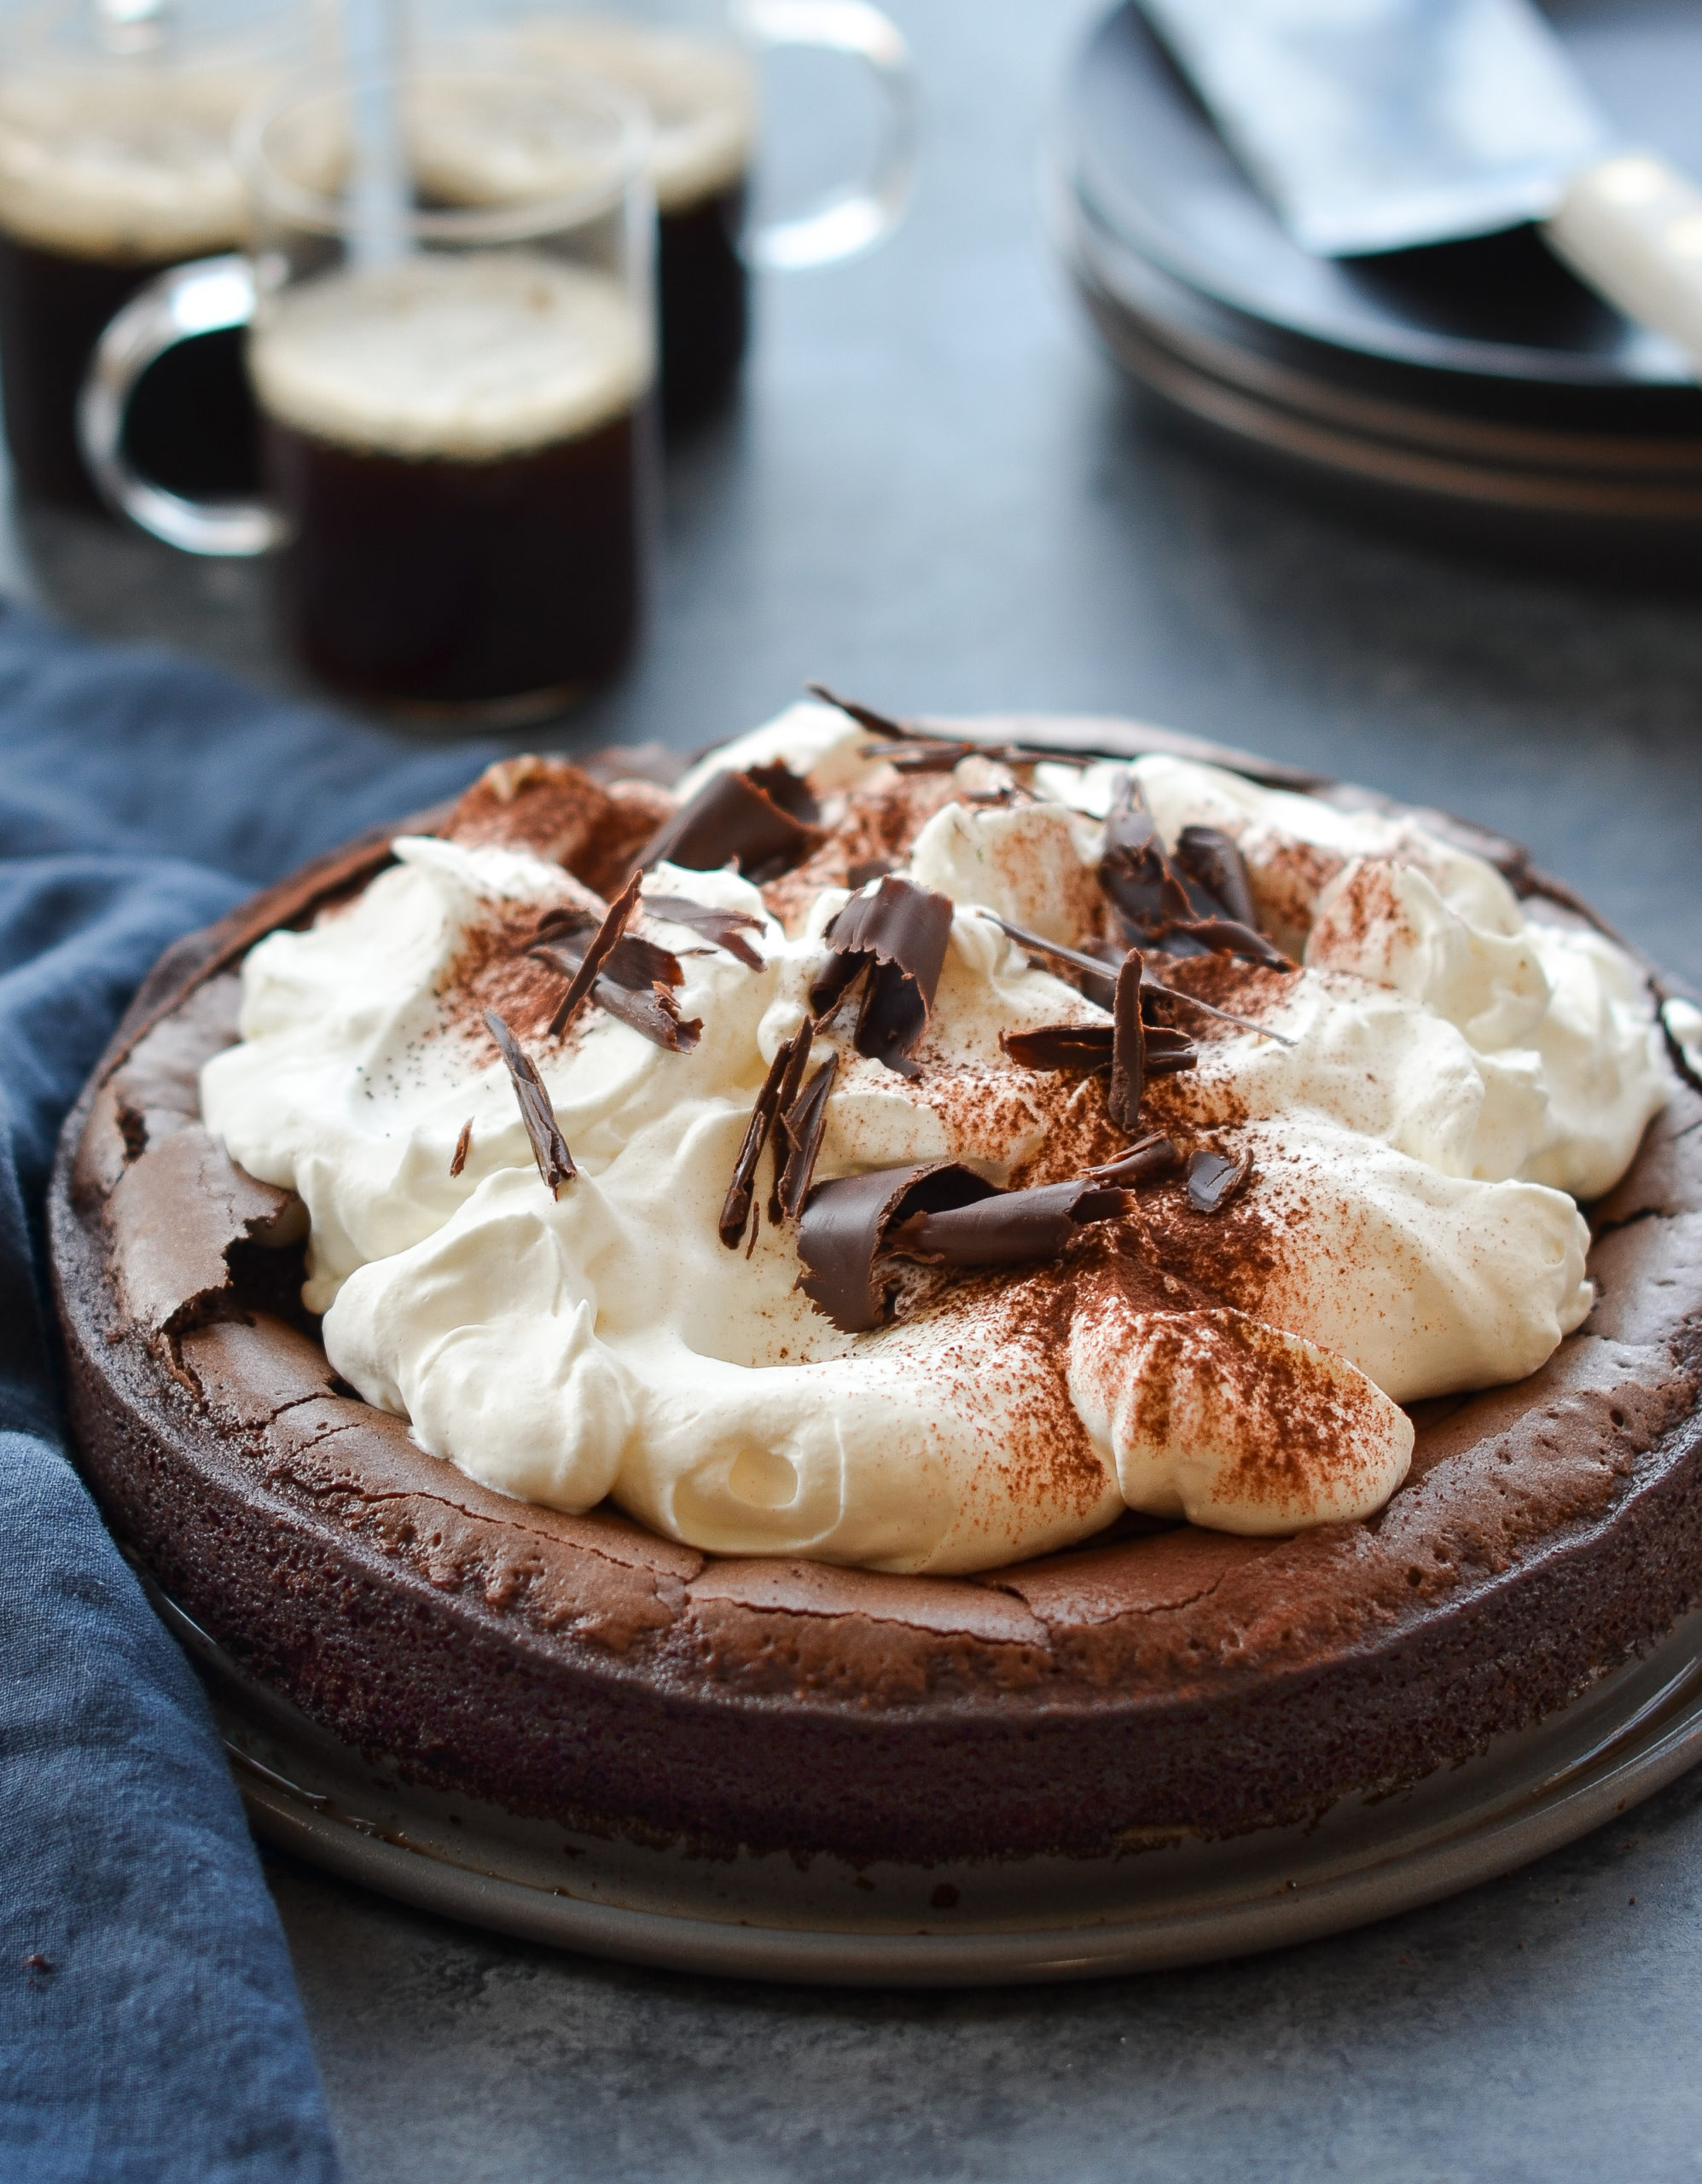 Flourless chocolate cake recipe | BBC Good Food